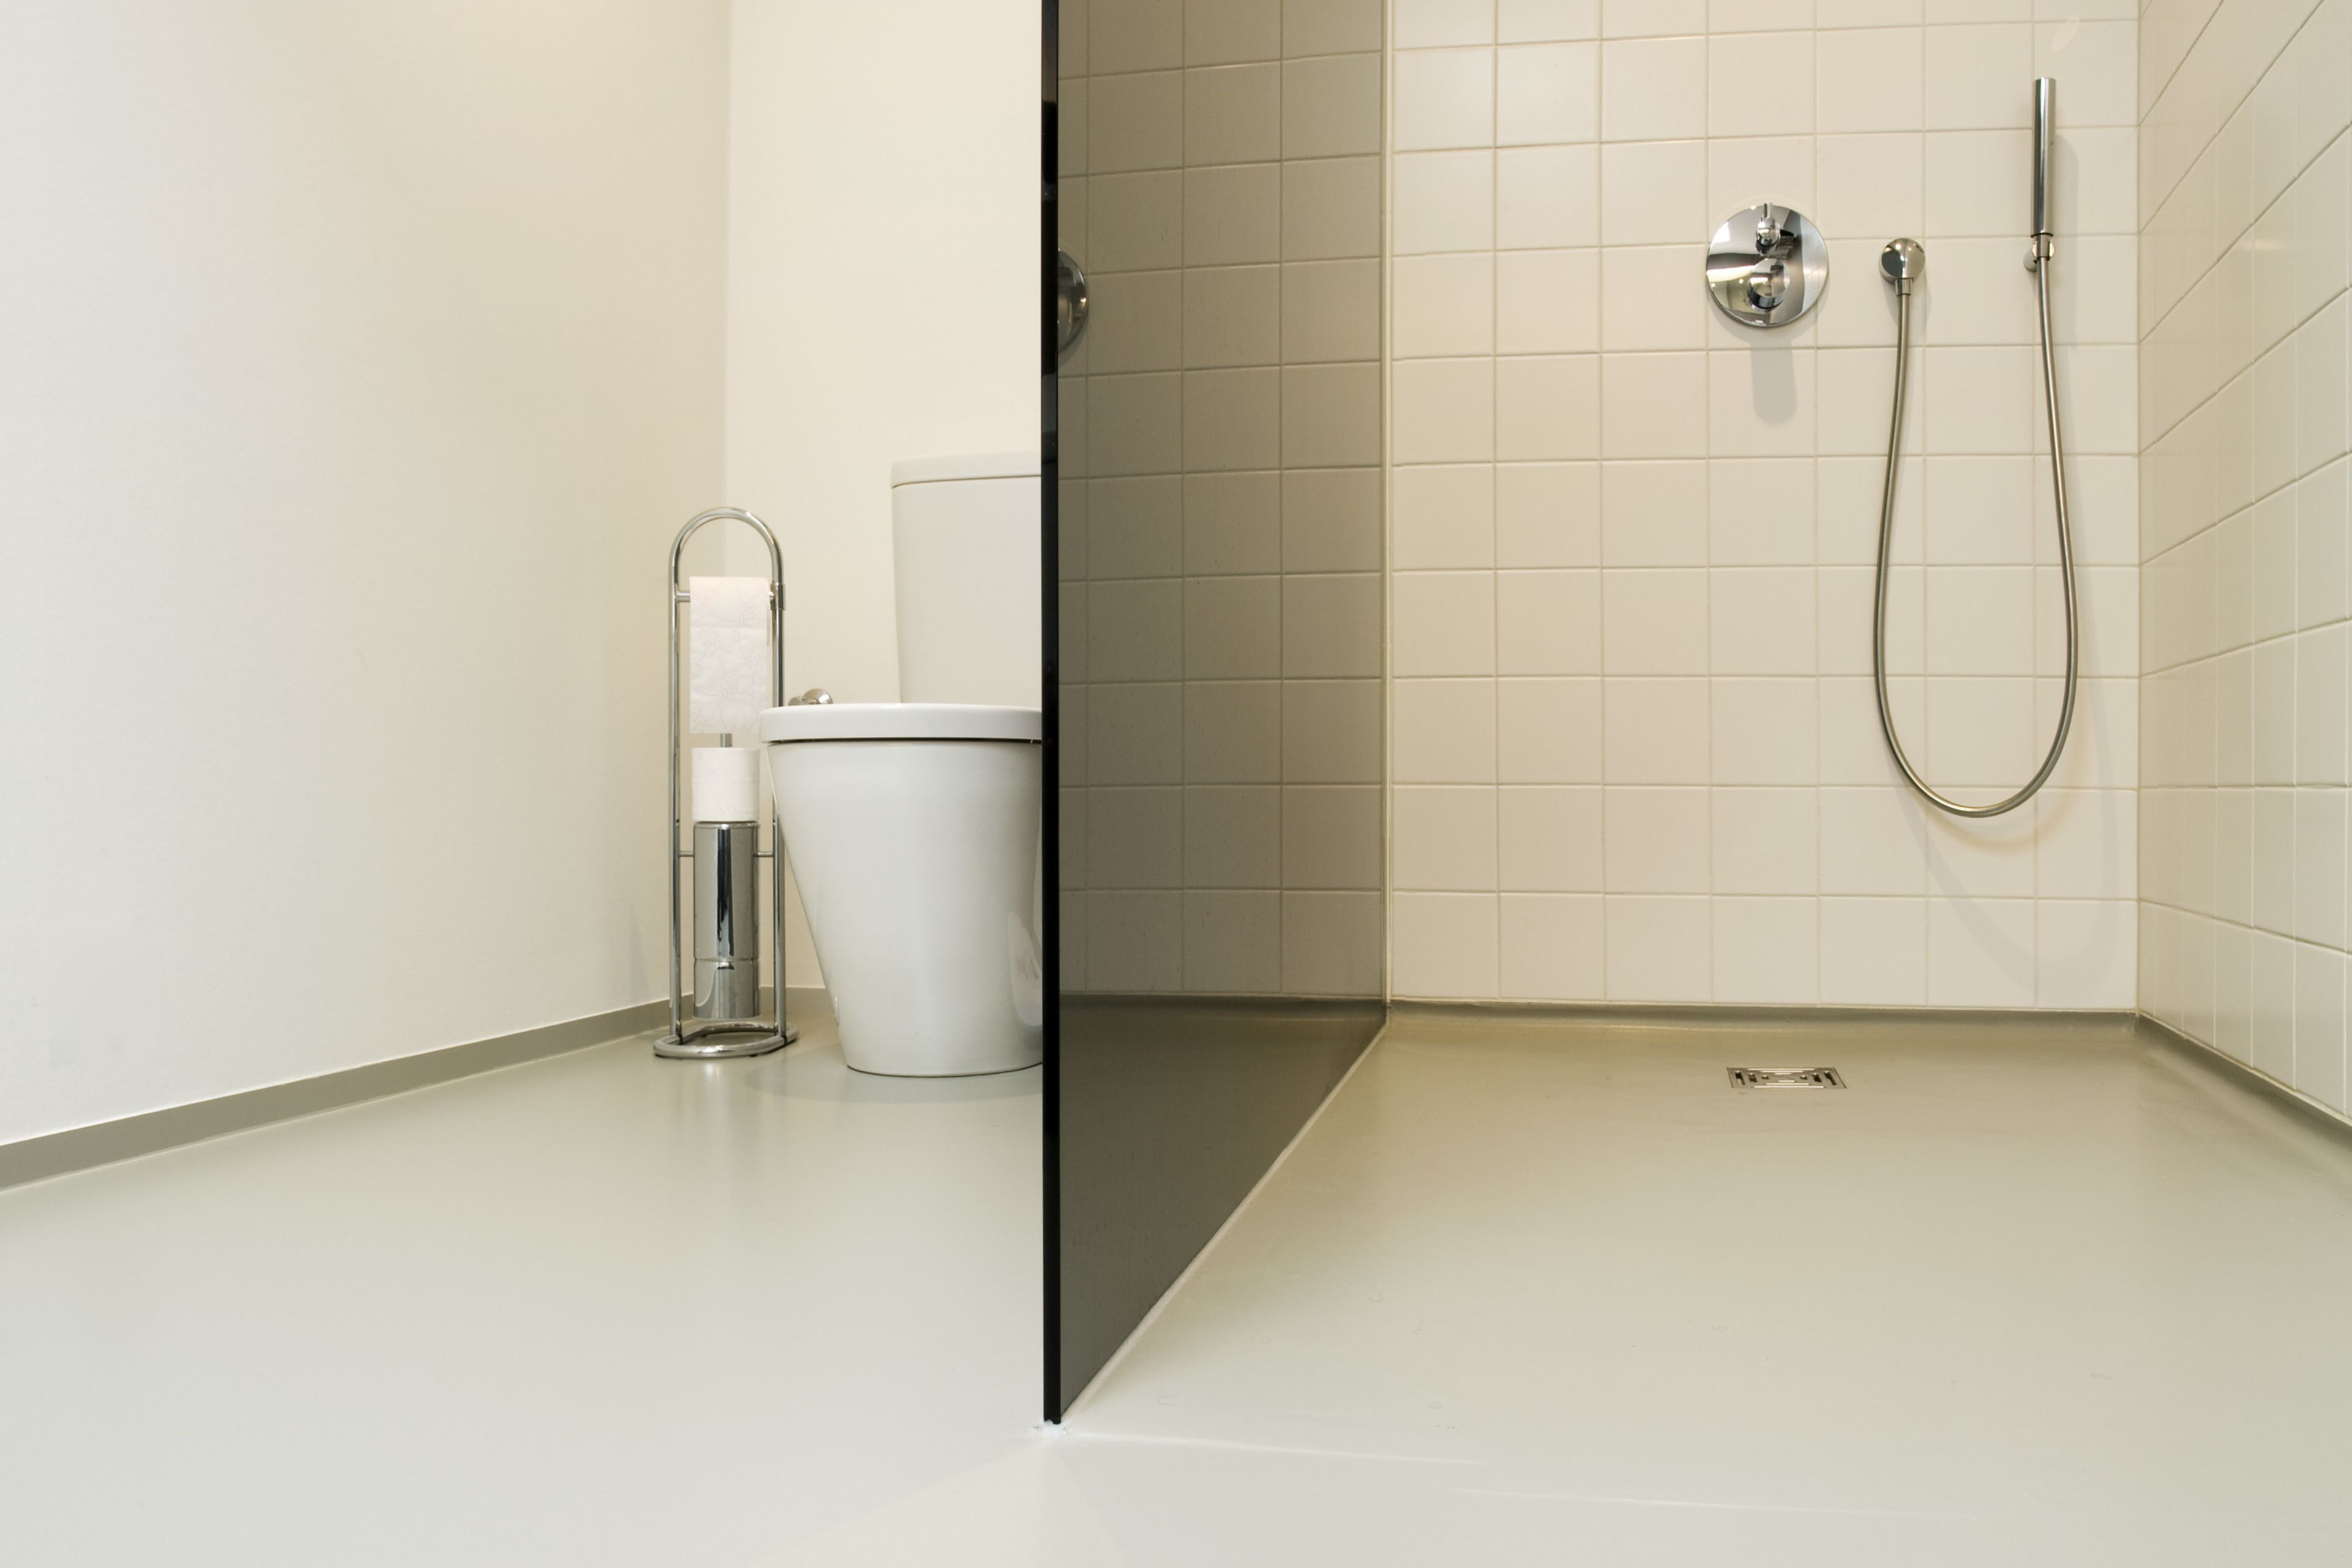 Sika ComfortFloor® grey floor in modern bathroom shower toilet